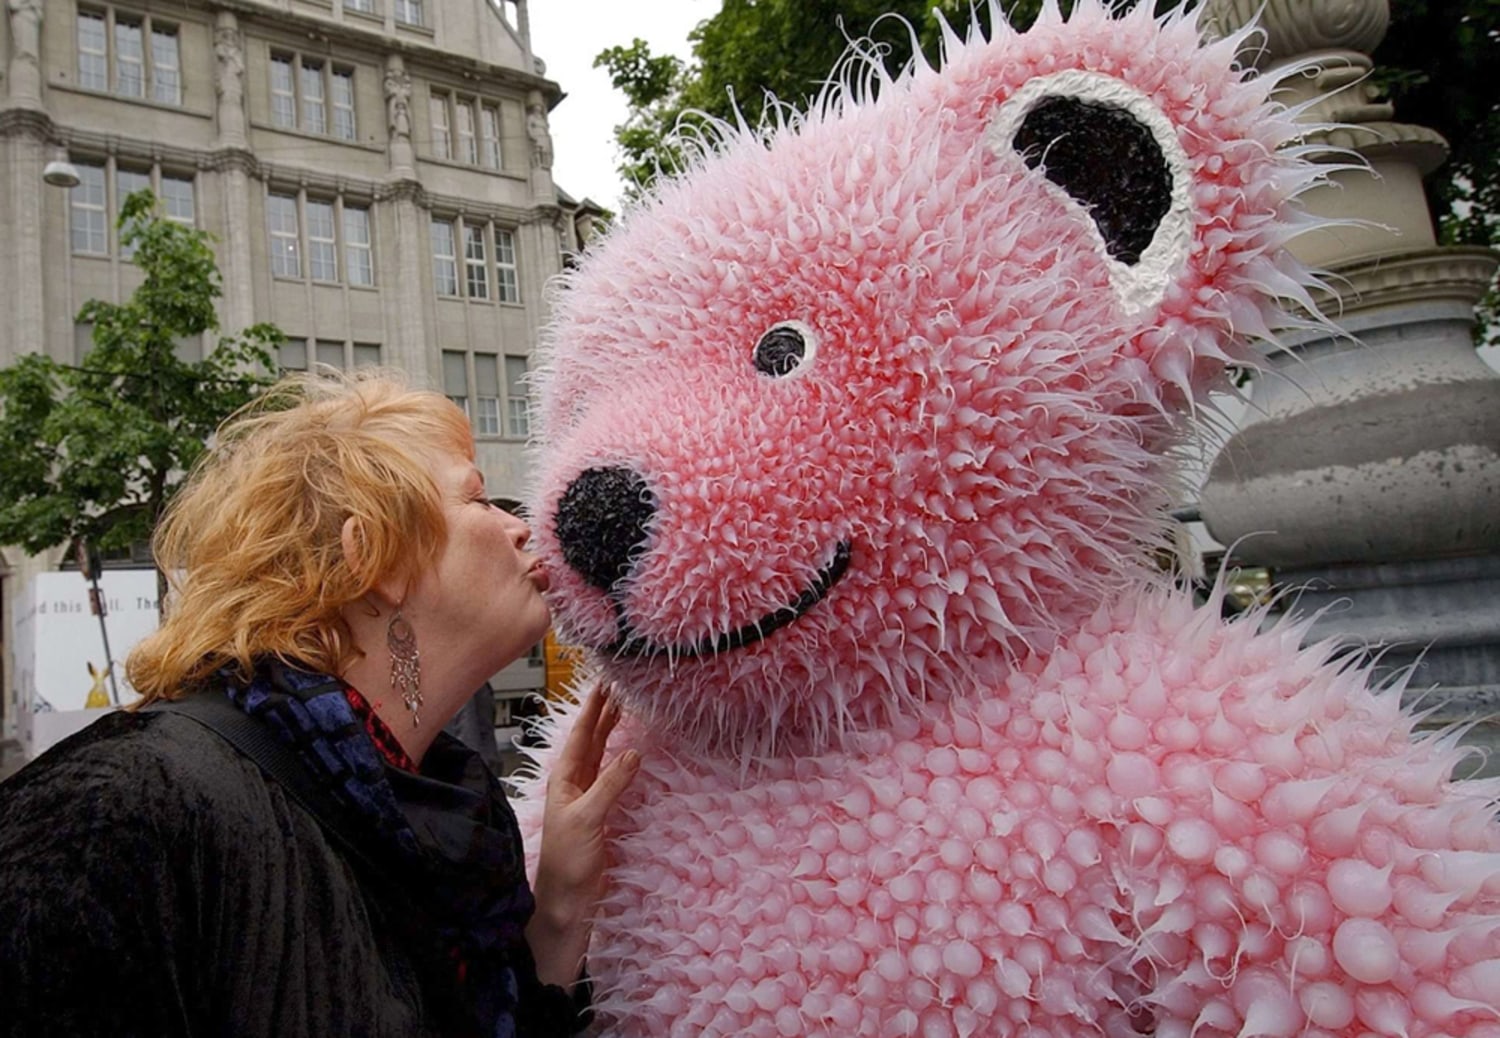 Museum Teddy bear, 29 cm, pink 